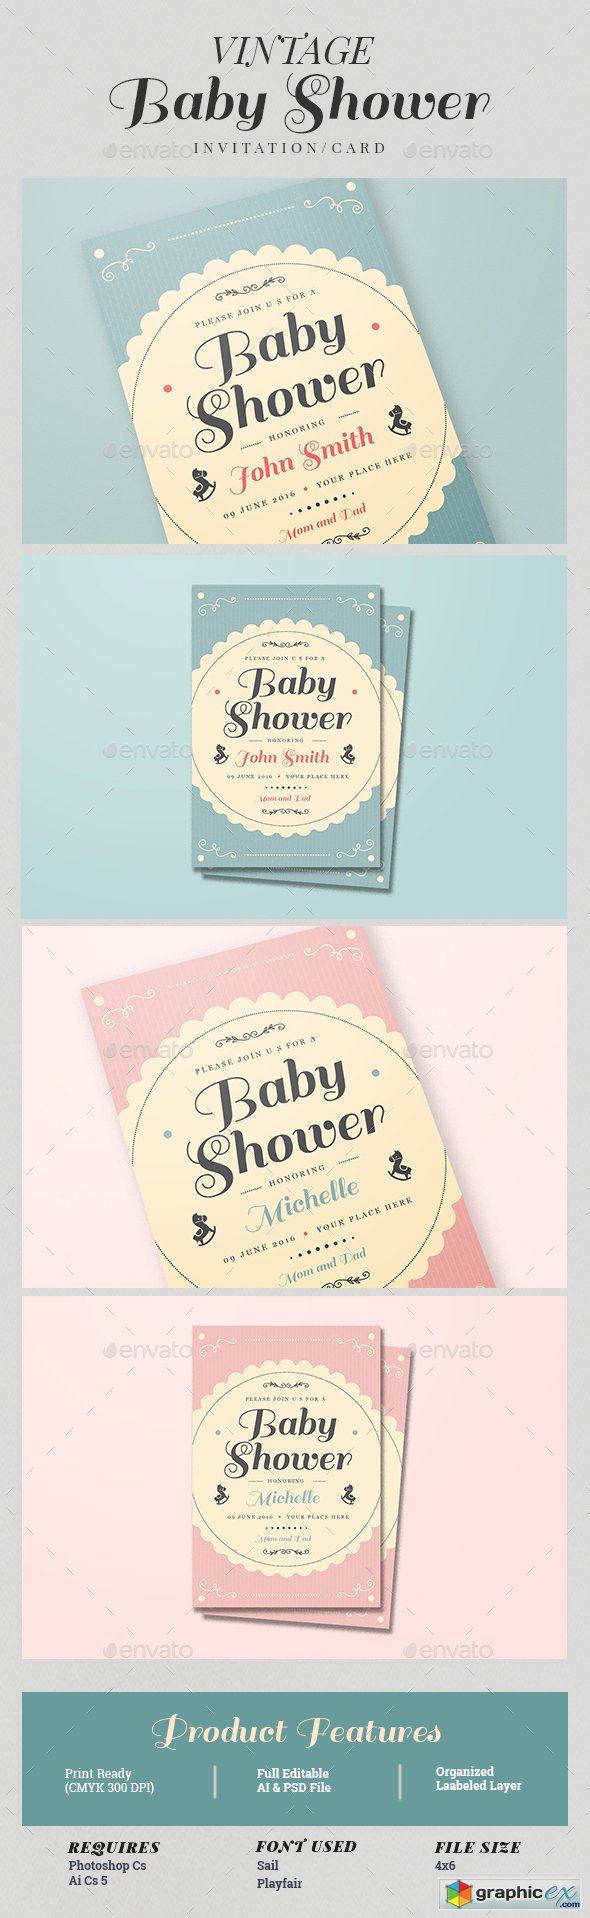 Vintage Baby Shower Invitation/Card